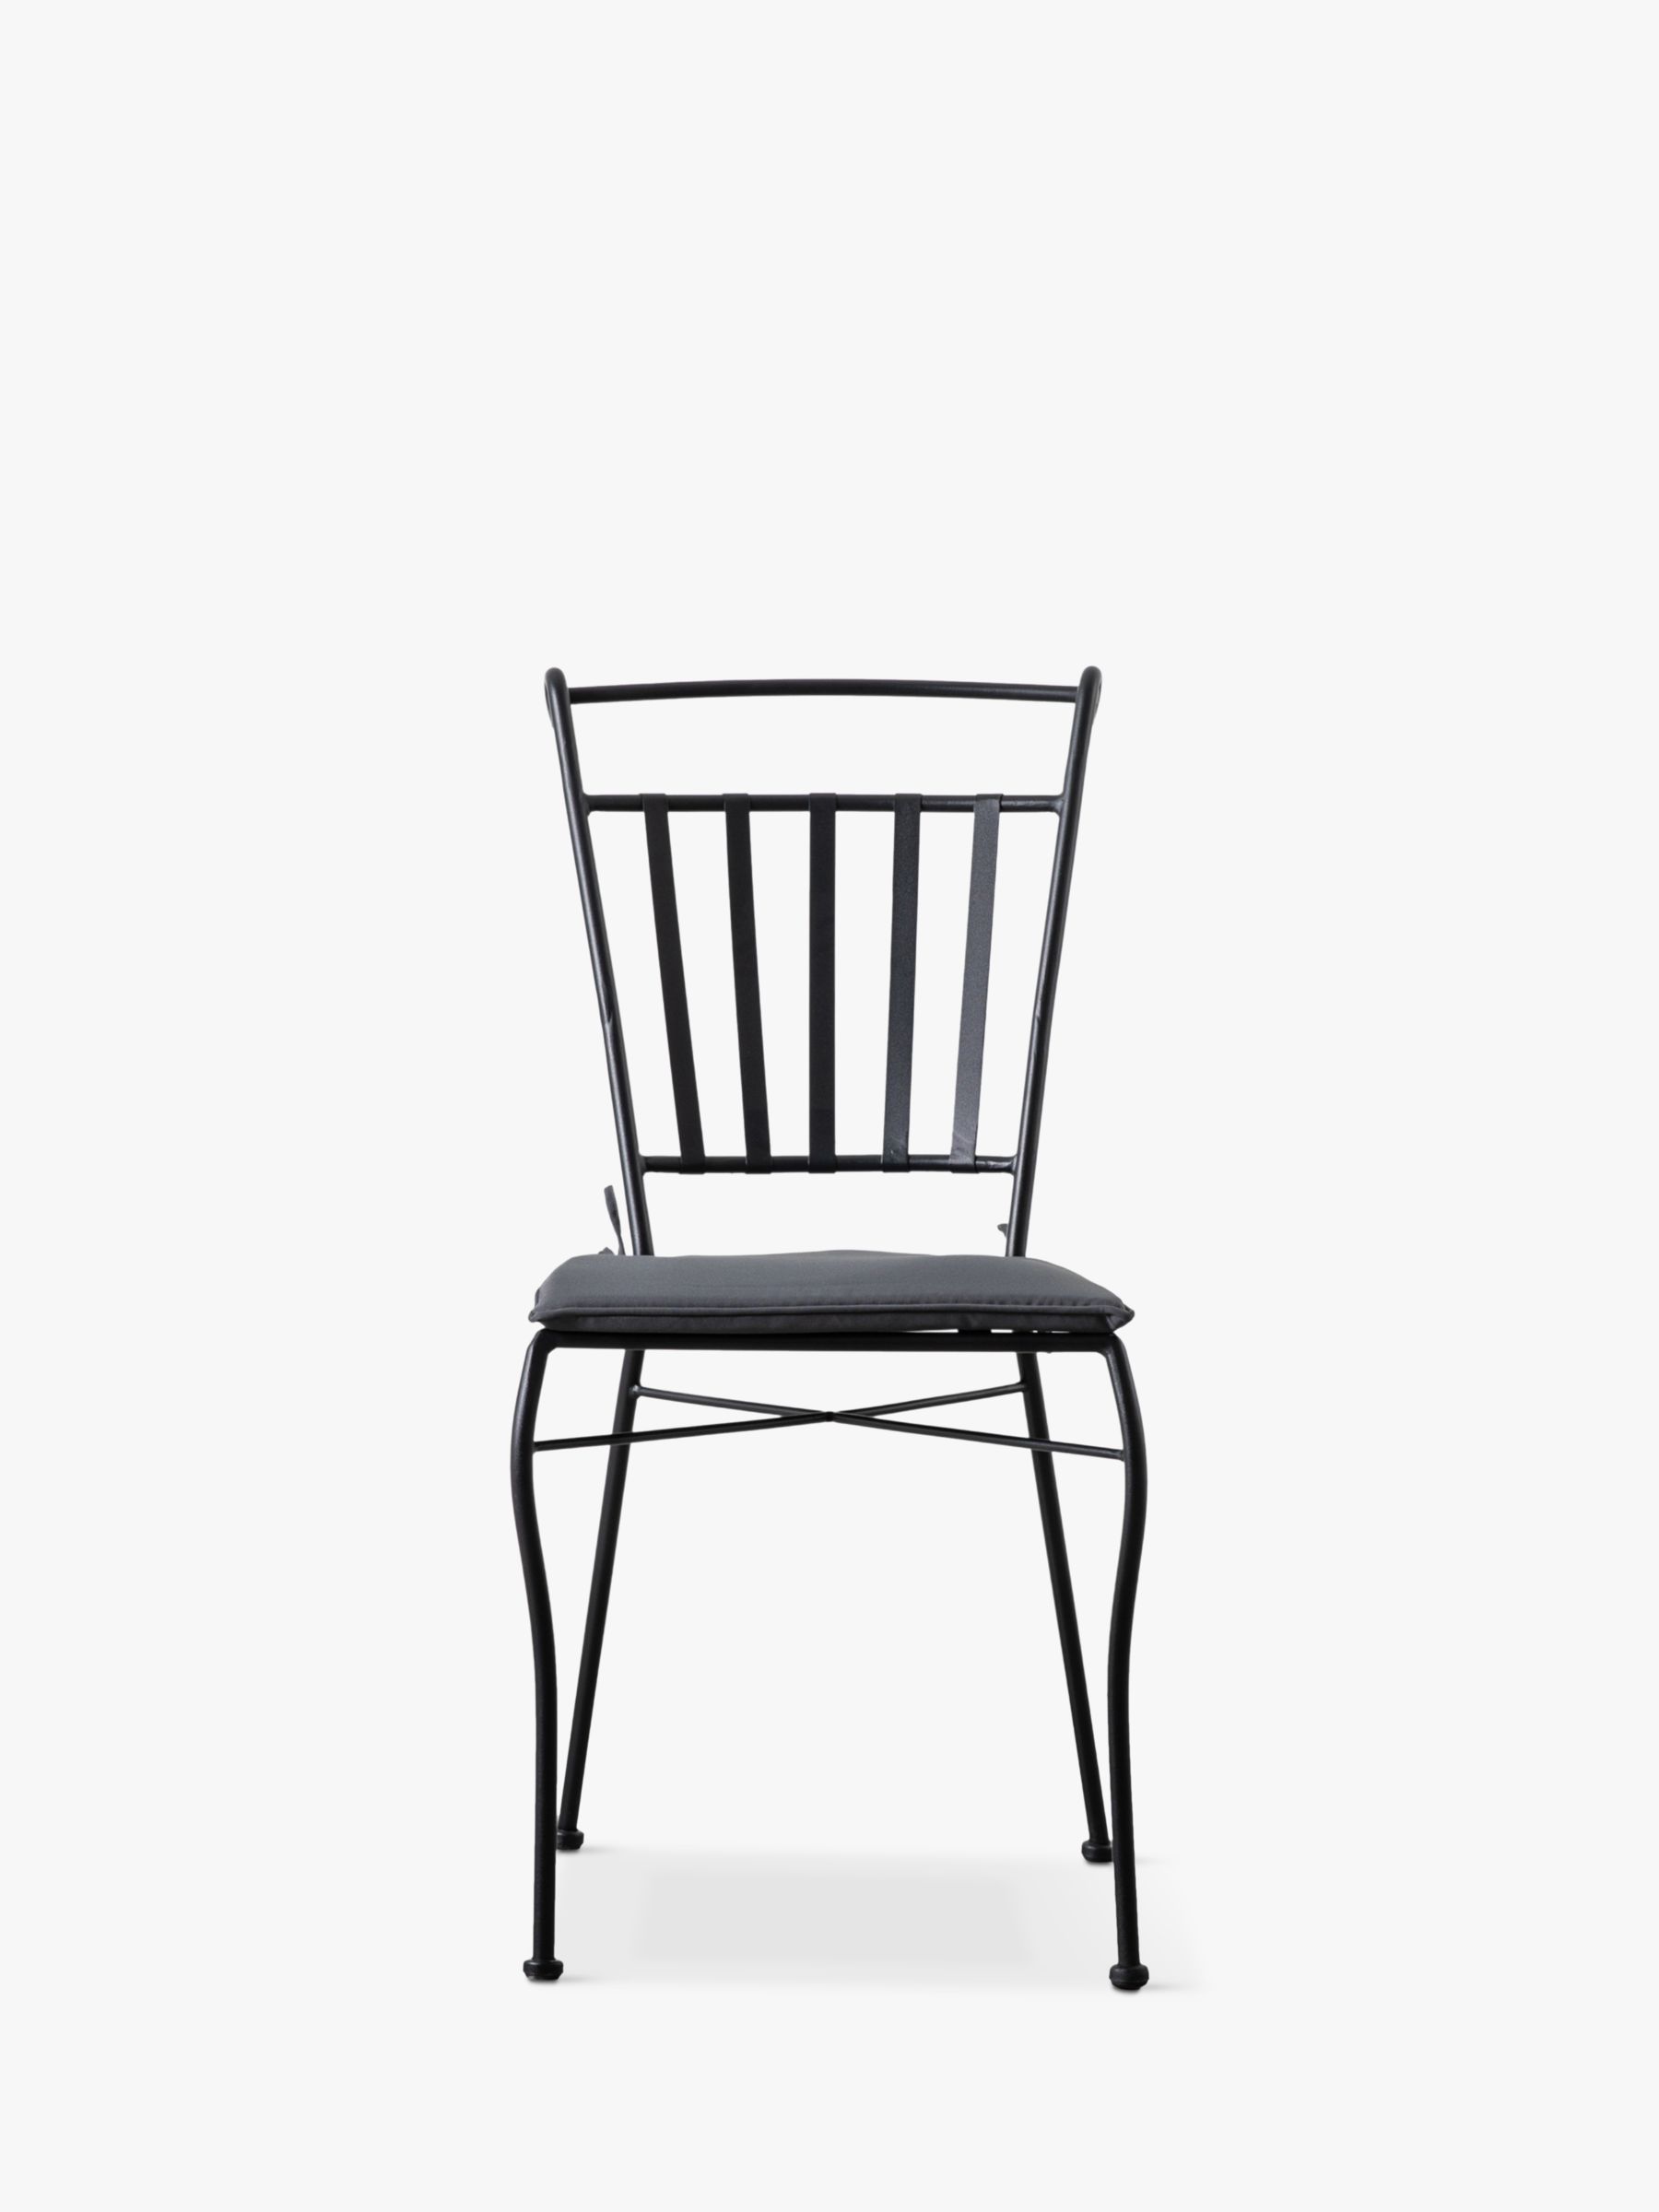 Photo of Gallery direct ripetta metal garden dining chair black